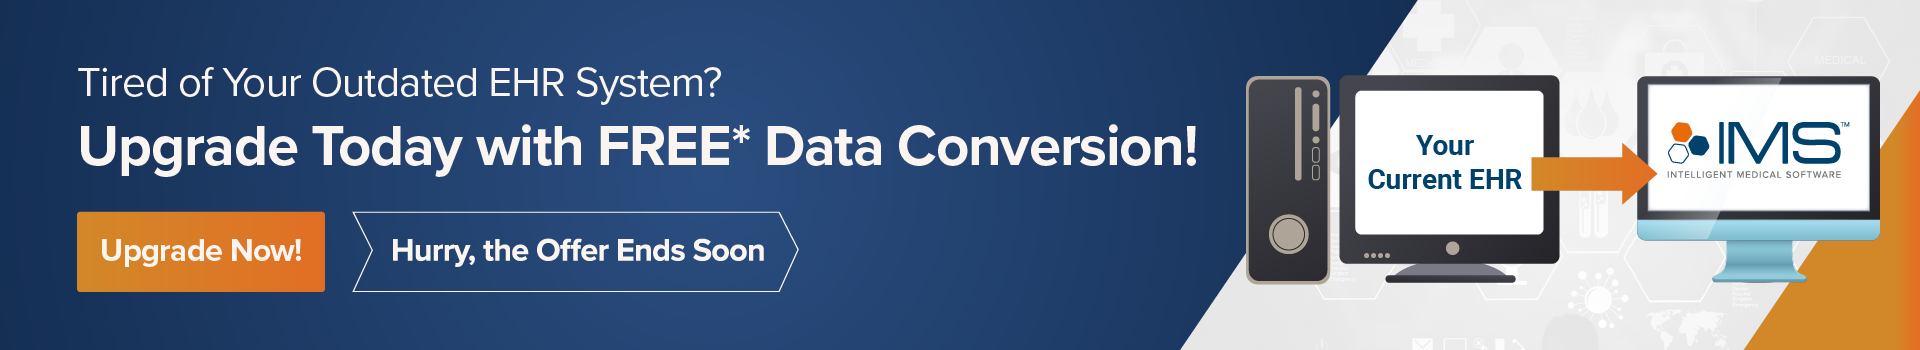 Data Conversion (Landing Page Banner)_IMS